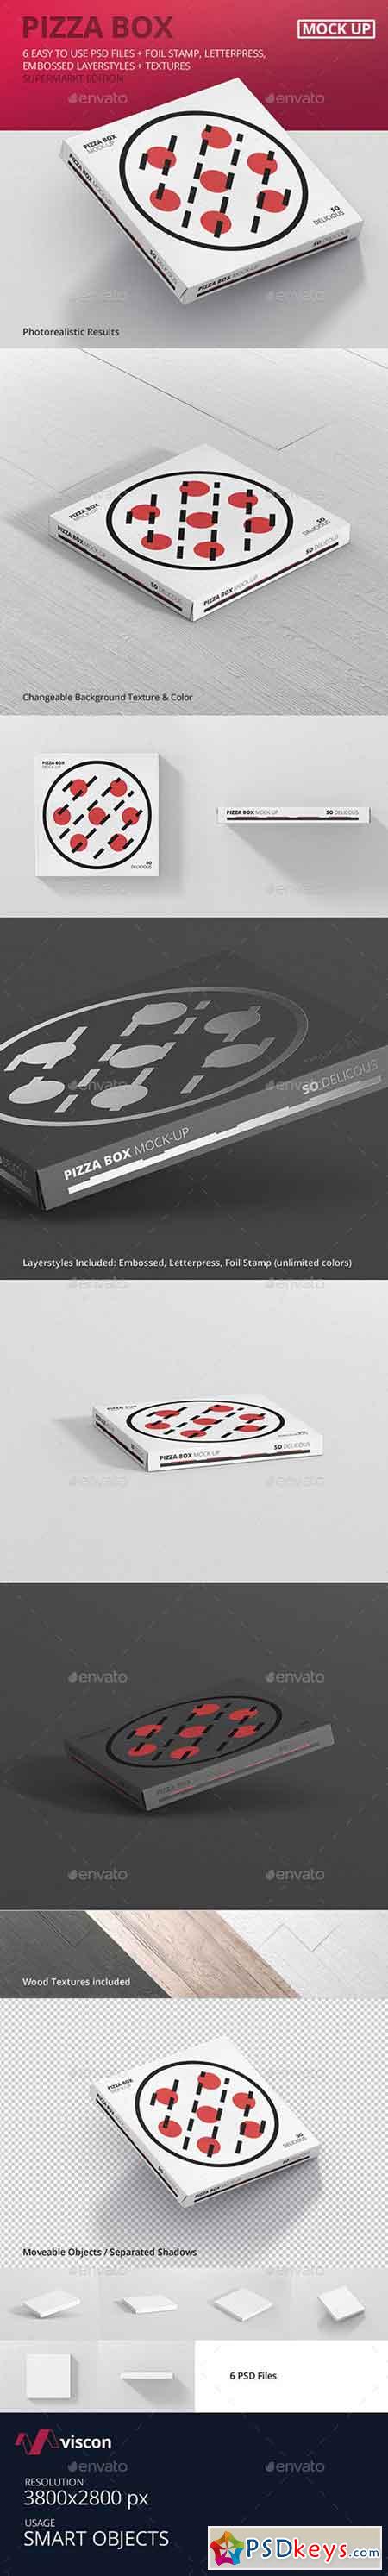 Pizza Box Mock-Up - Supermarket Edition 16323354